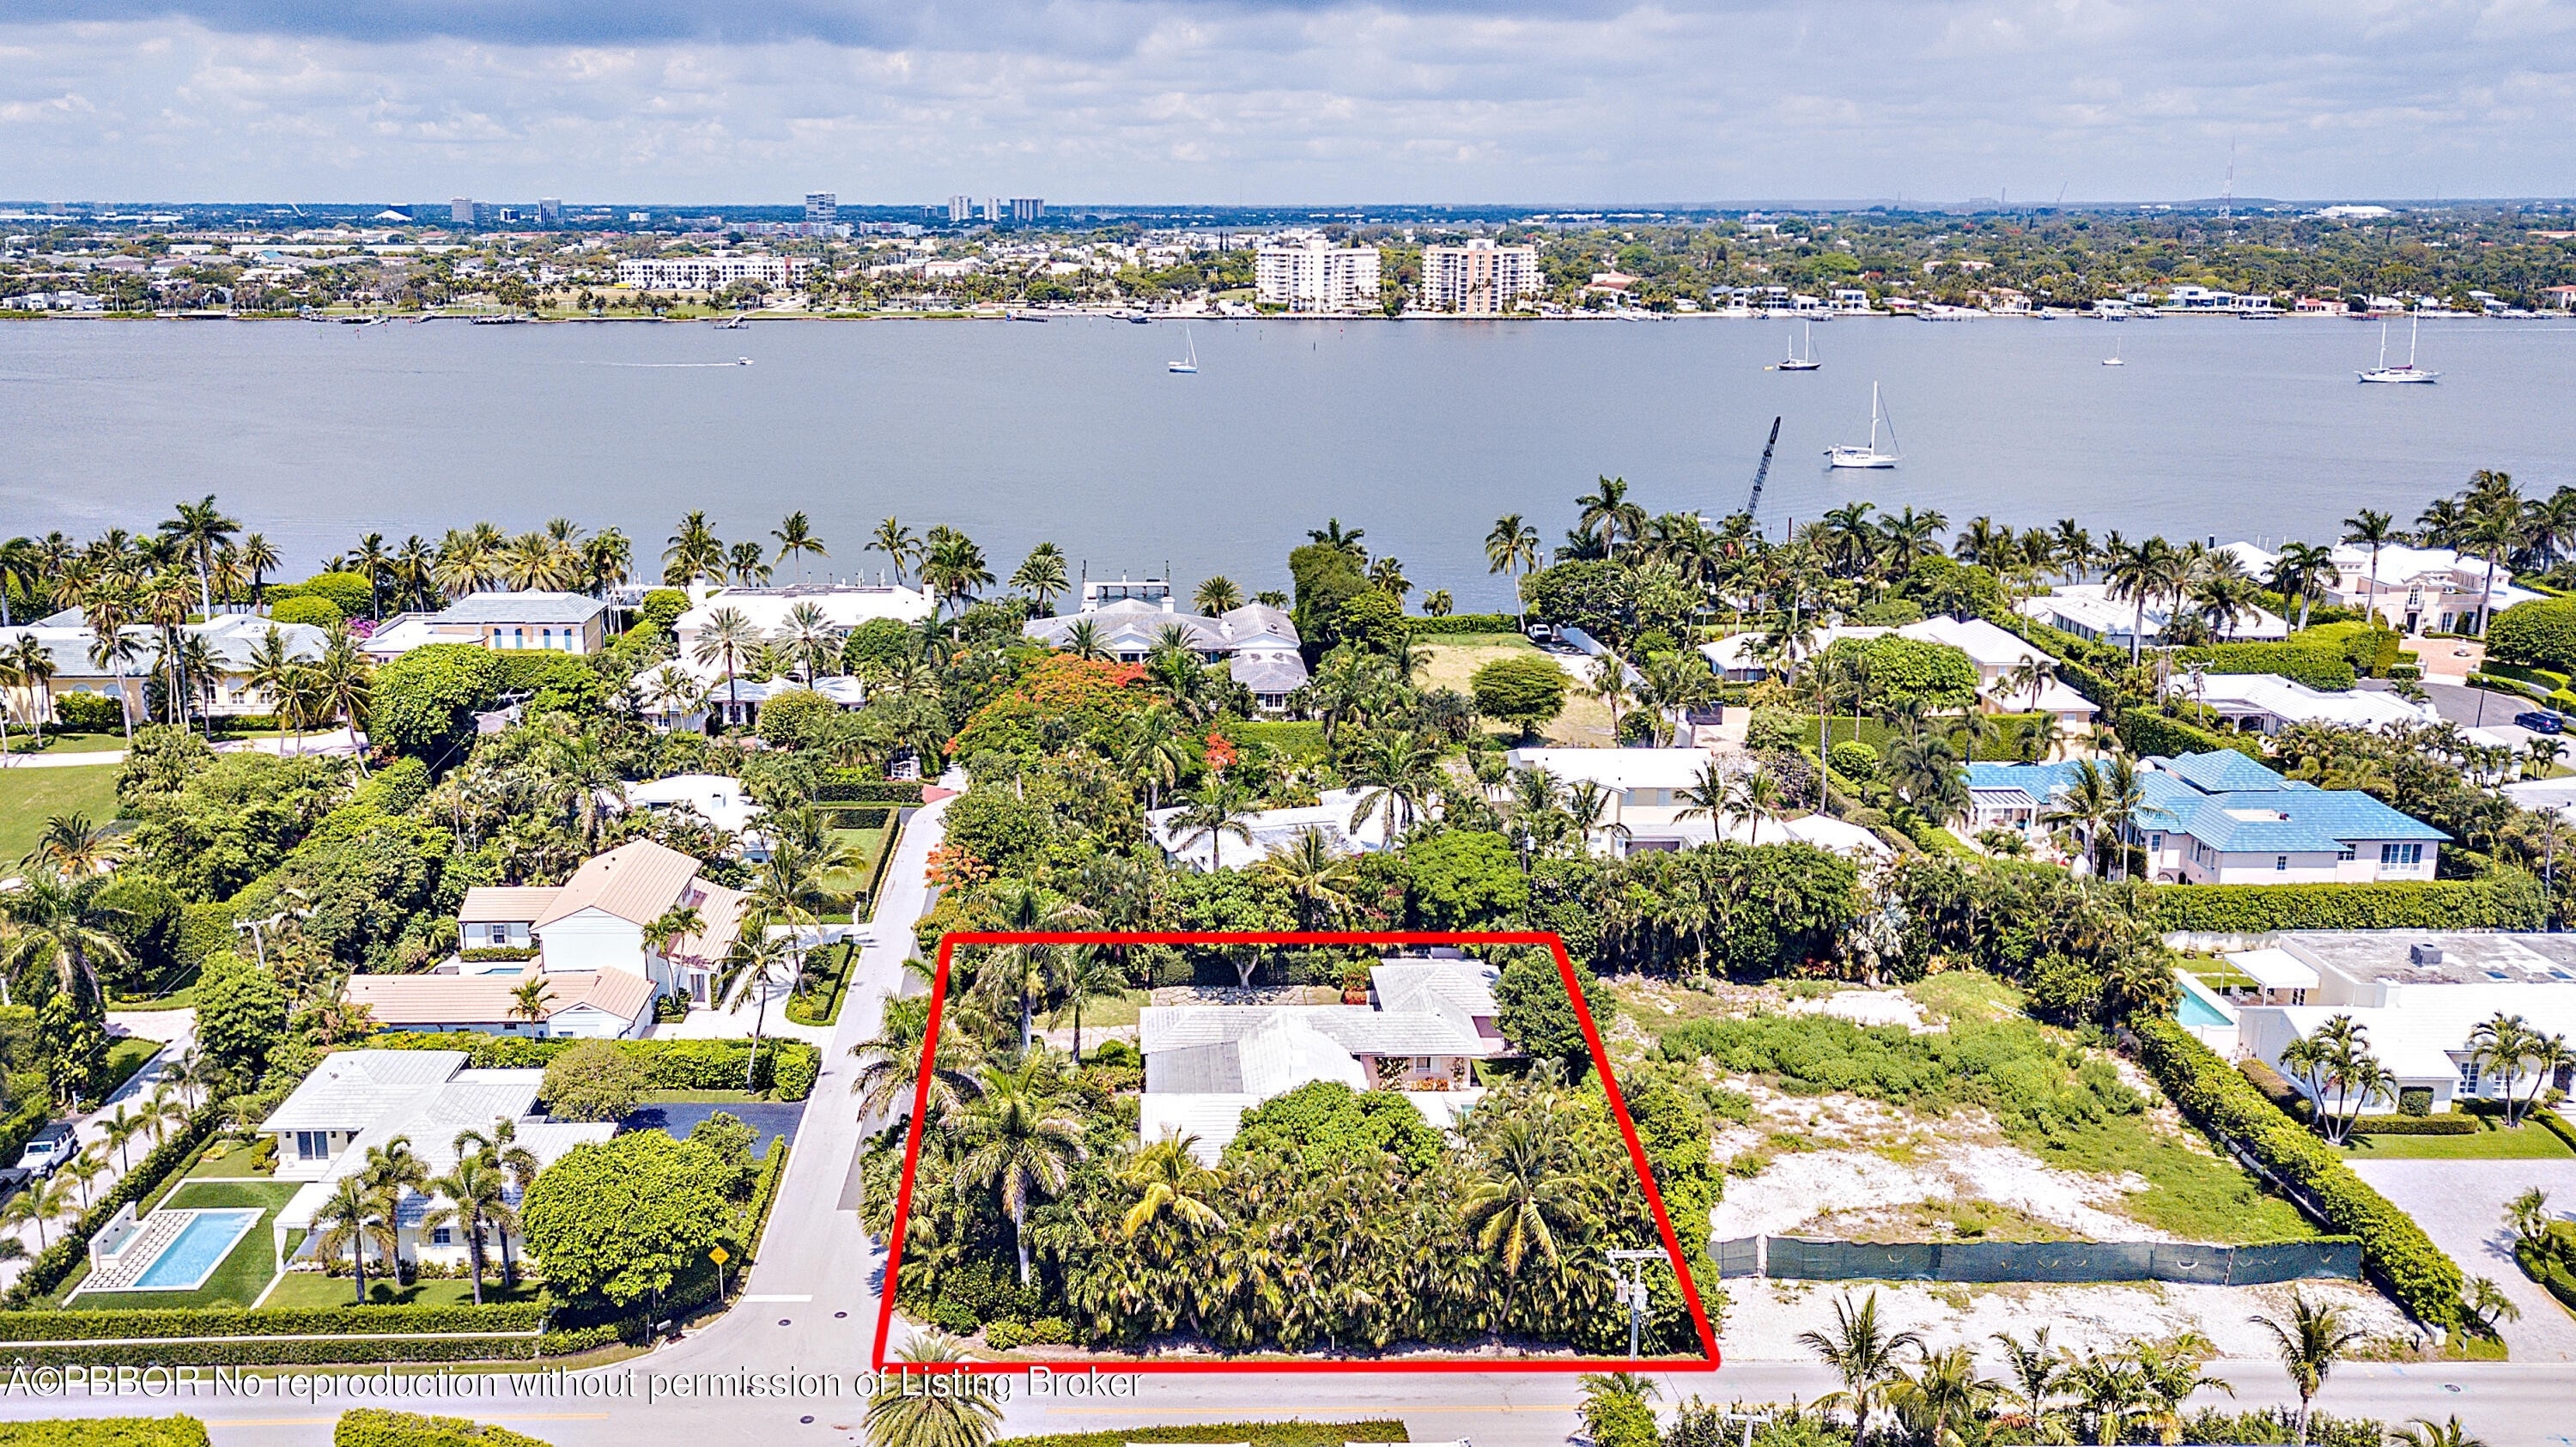 Property at Palm Beach, FL 33480